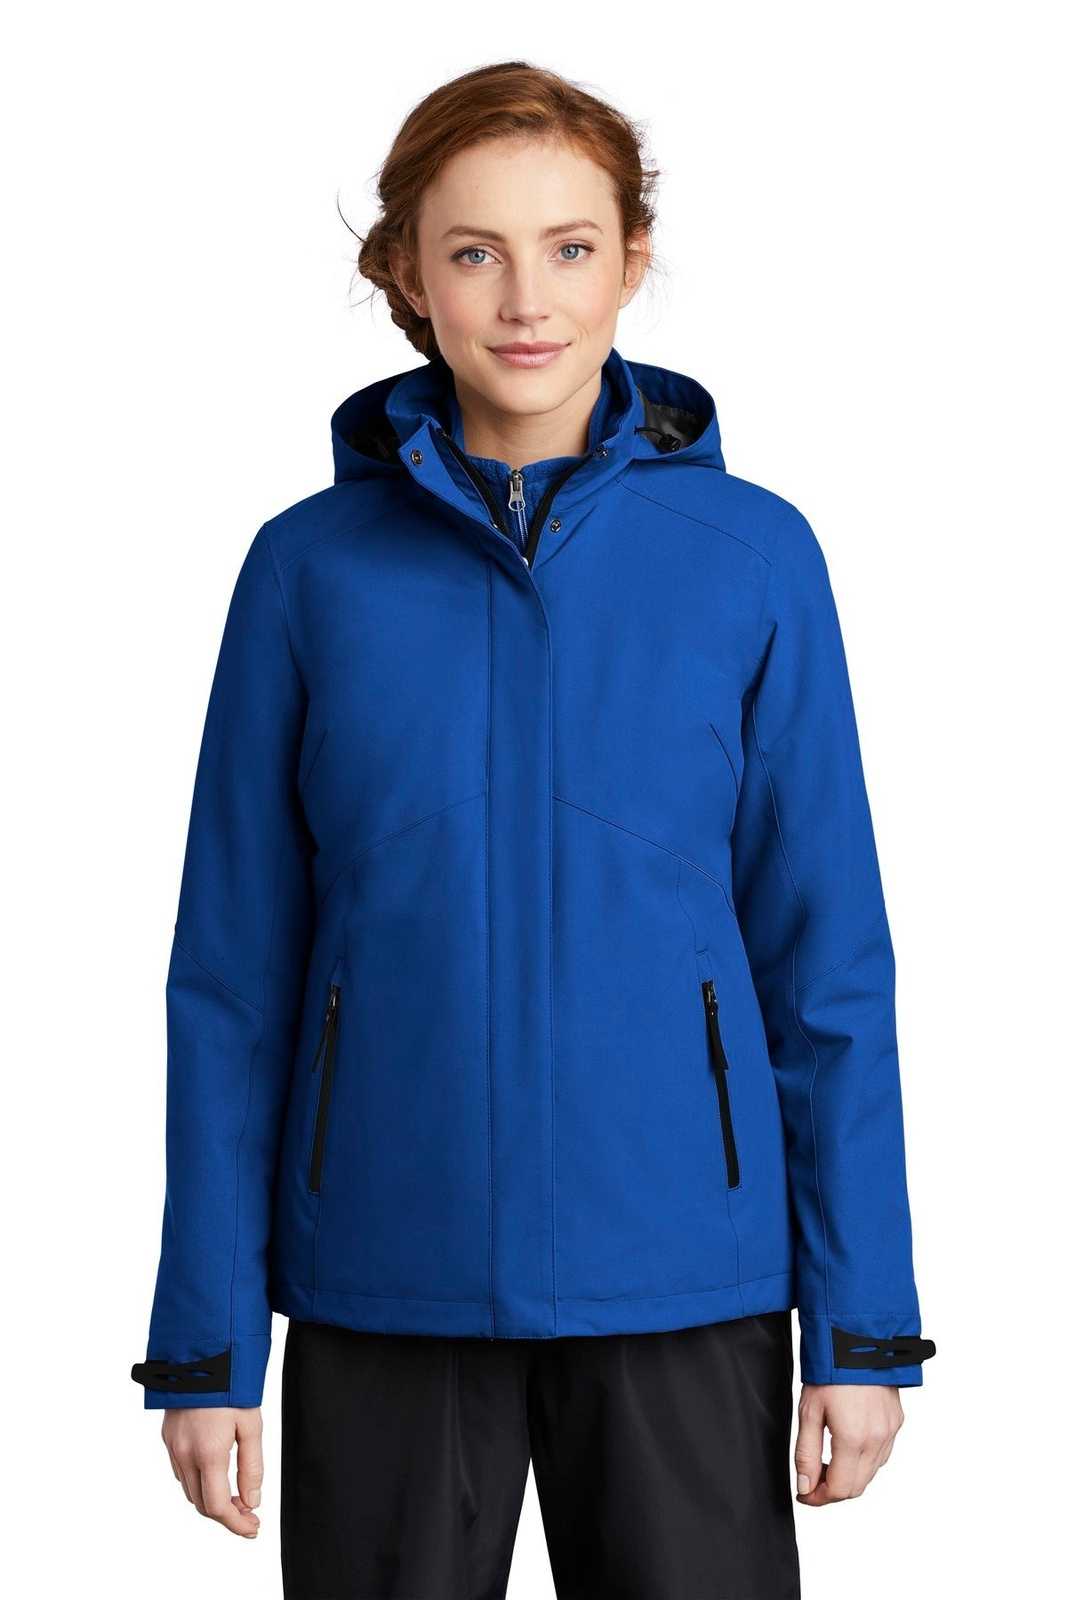 Port Authority L405 Ladies Insulated Waterproof Tech Jacket - Cobalt Blue - HIT a Double - 1